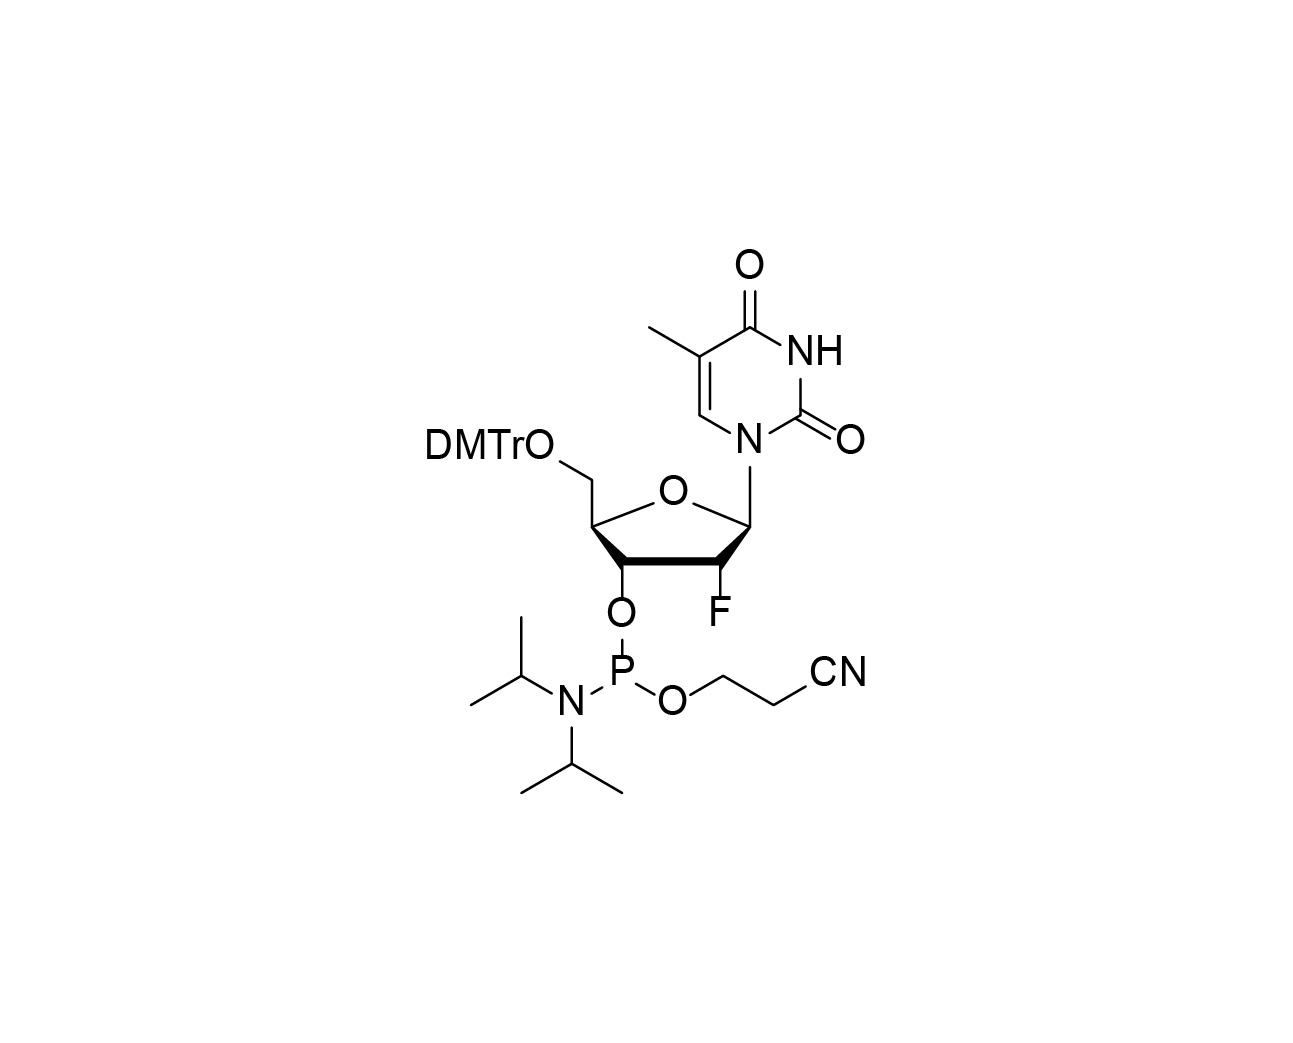 DMTr-2'-F-dT-3'-CE-Phosphoramidite